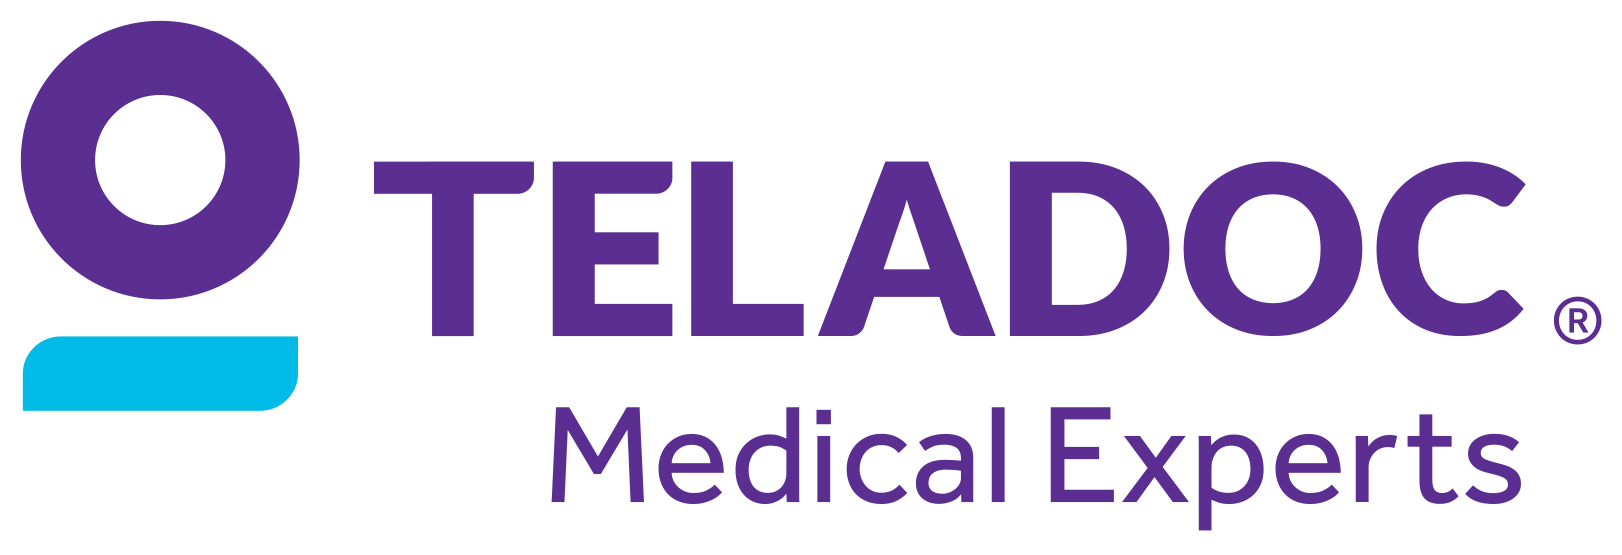 Teladoc Medical Experts Elite Diagnostic Imaging Service